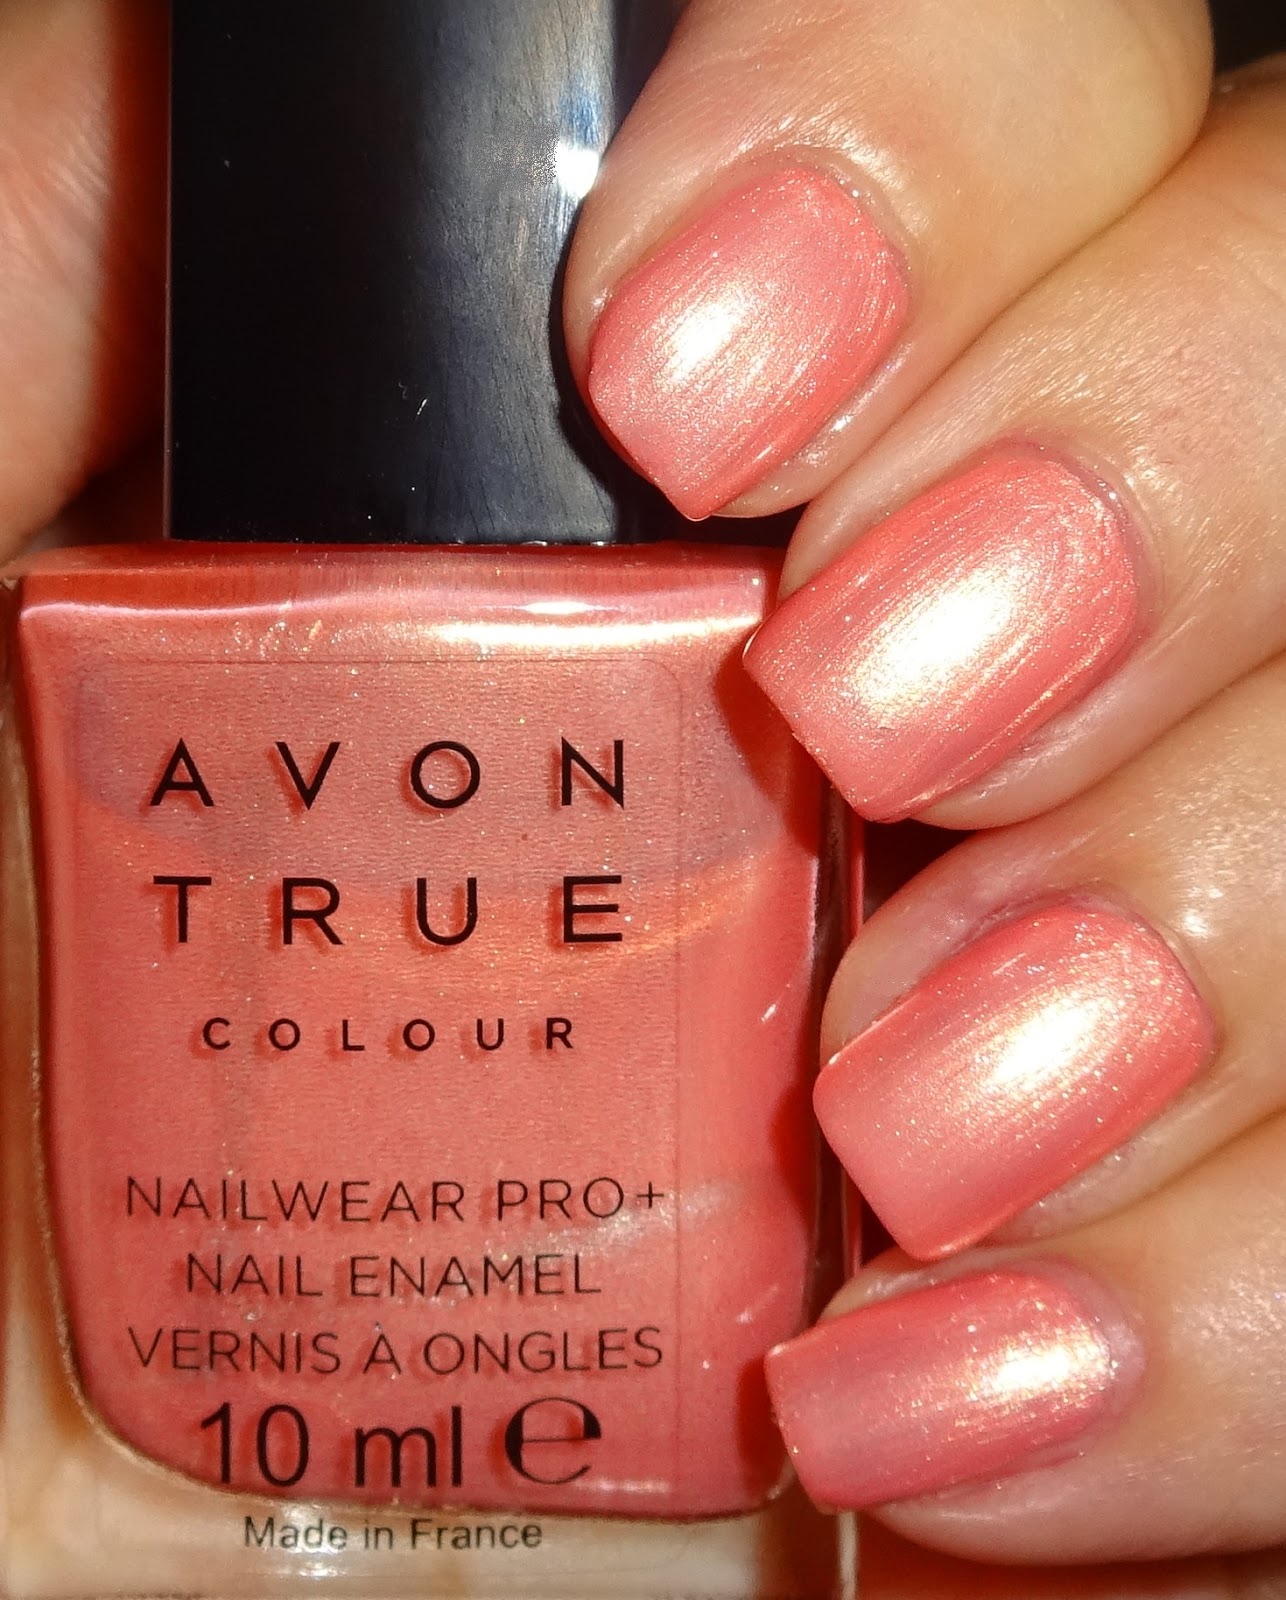 Wendy's Delights: Avon True Colour Nailwear Pro+ Nail Enamel - Rose Gold